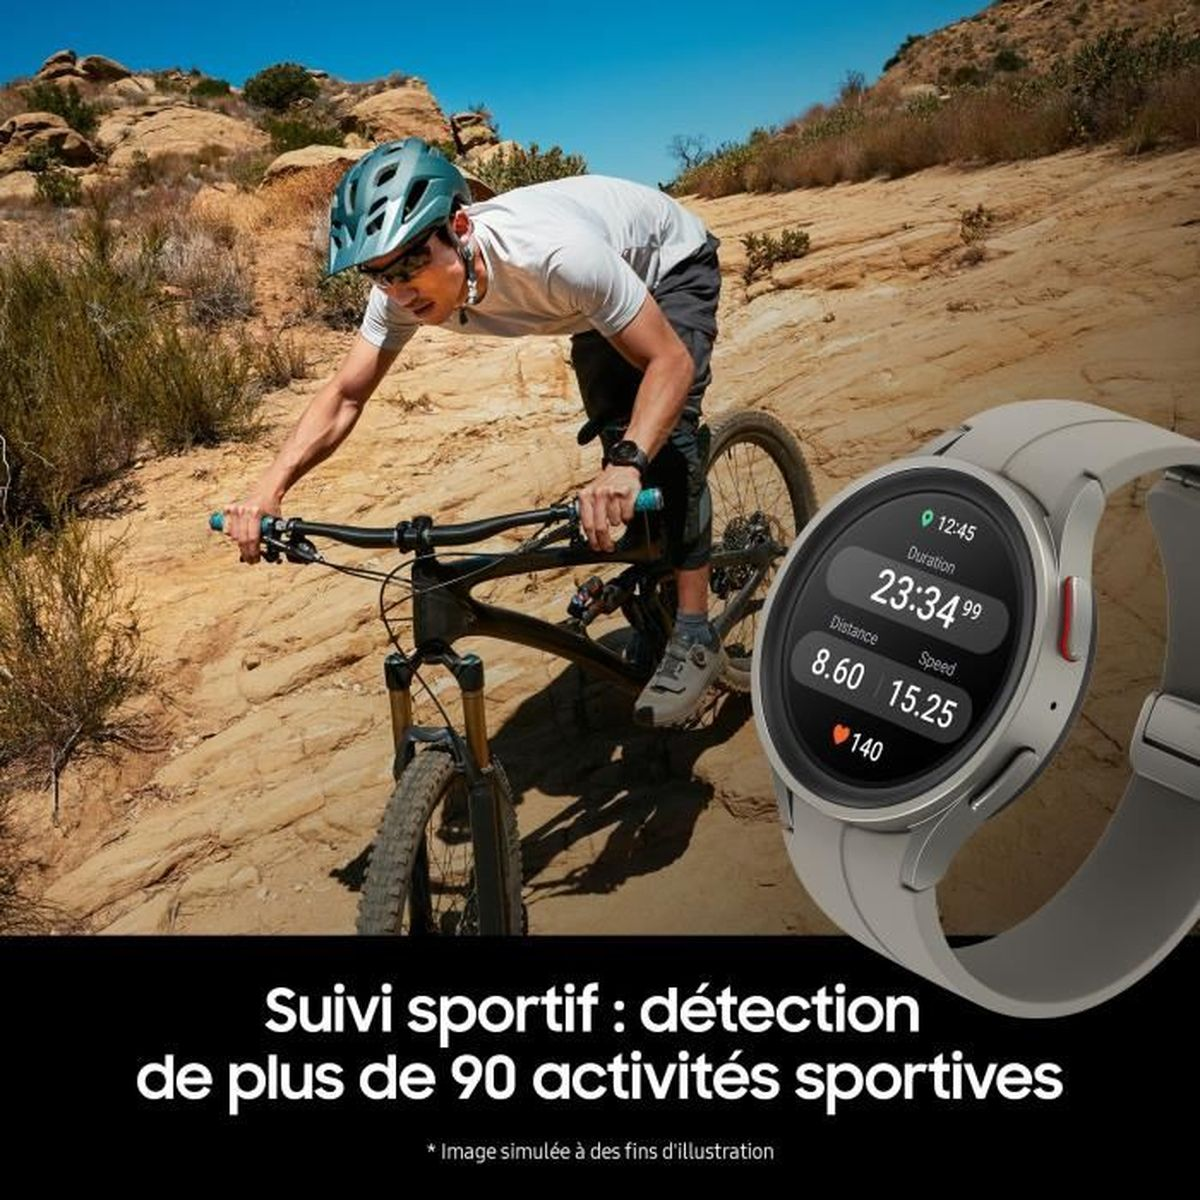 Watch5 SAMSUNG Pro Silver/Black Smartwatch silicone,